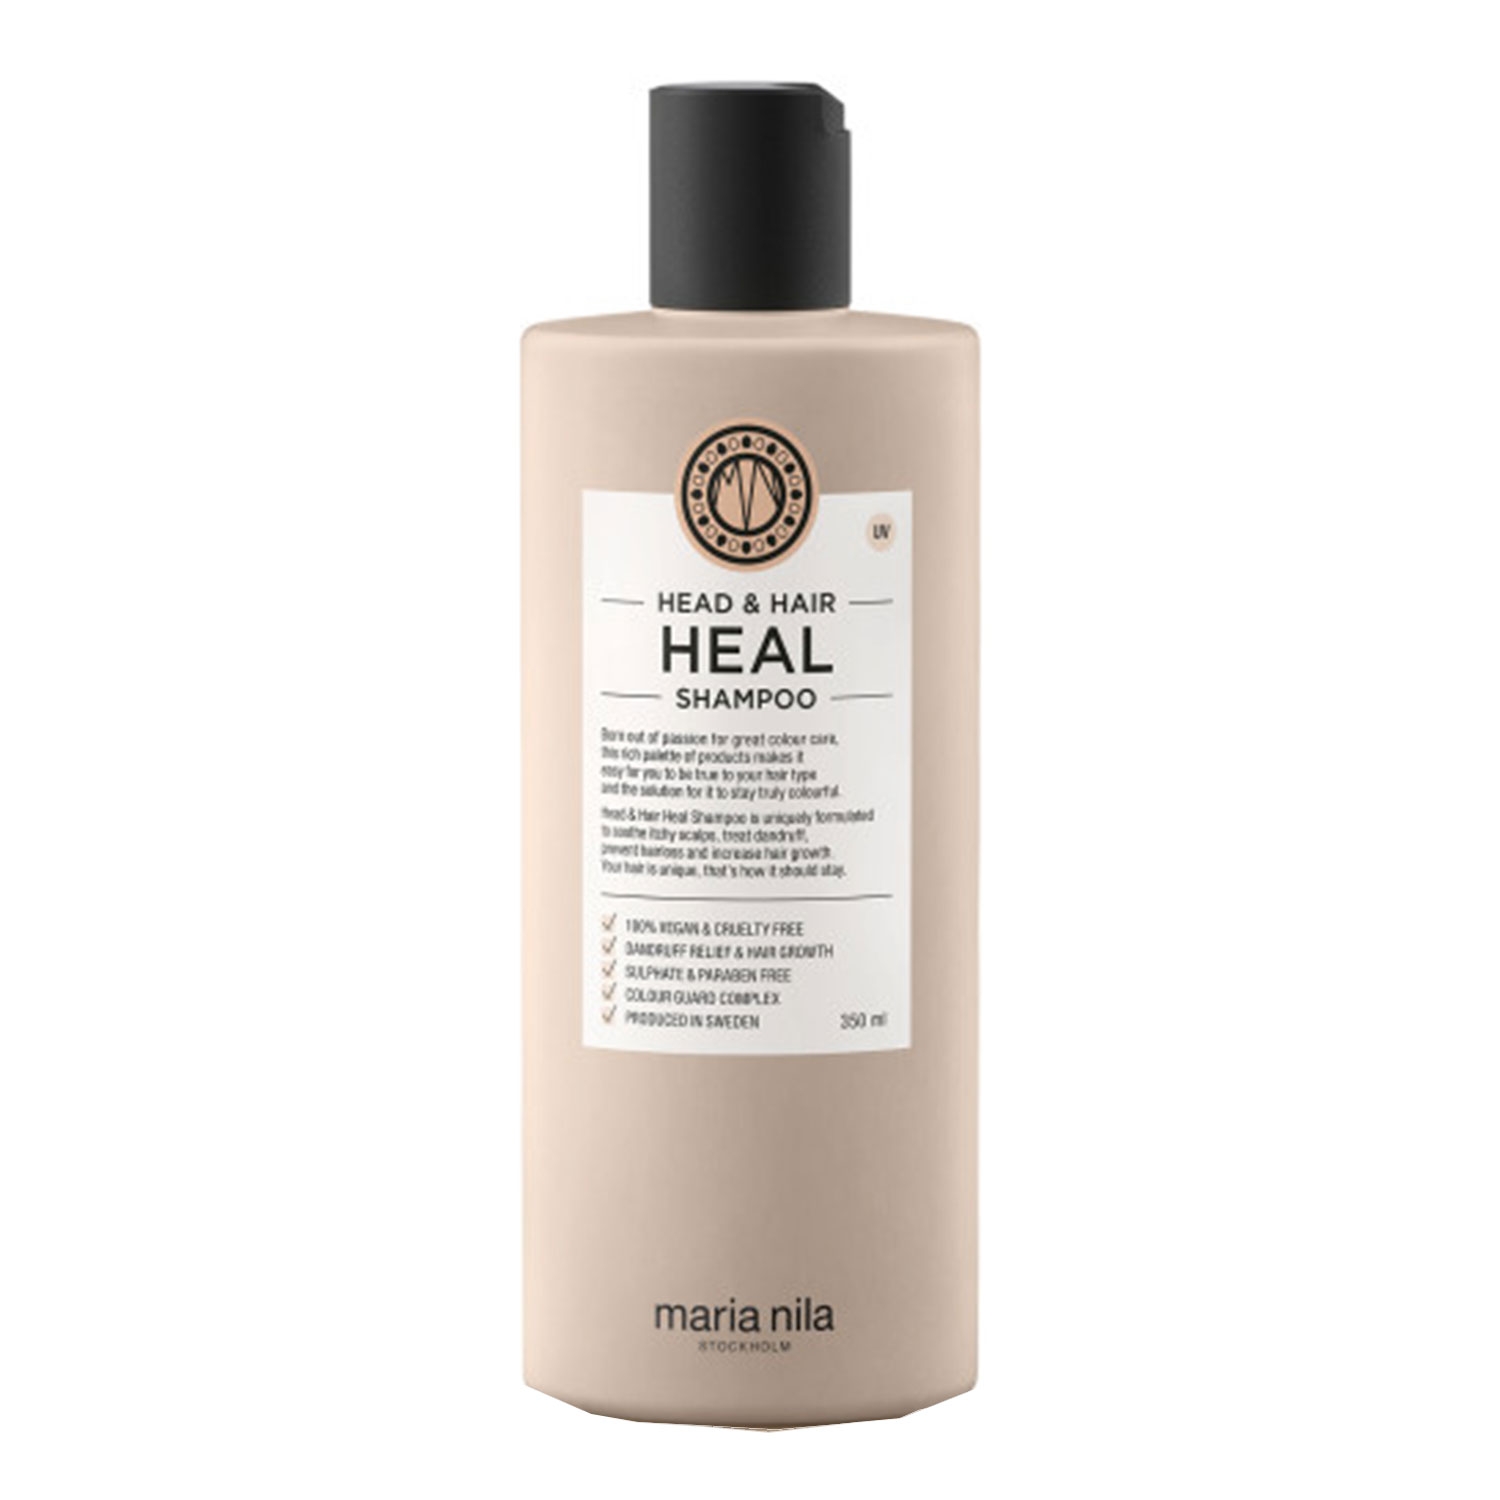 Produktbild von Care & Style - Head & Hair Heal Shampoo